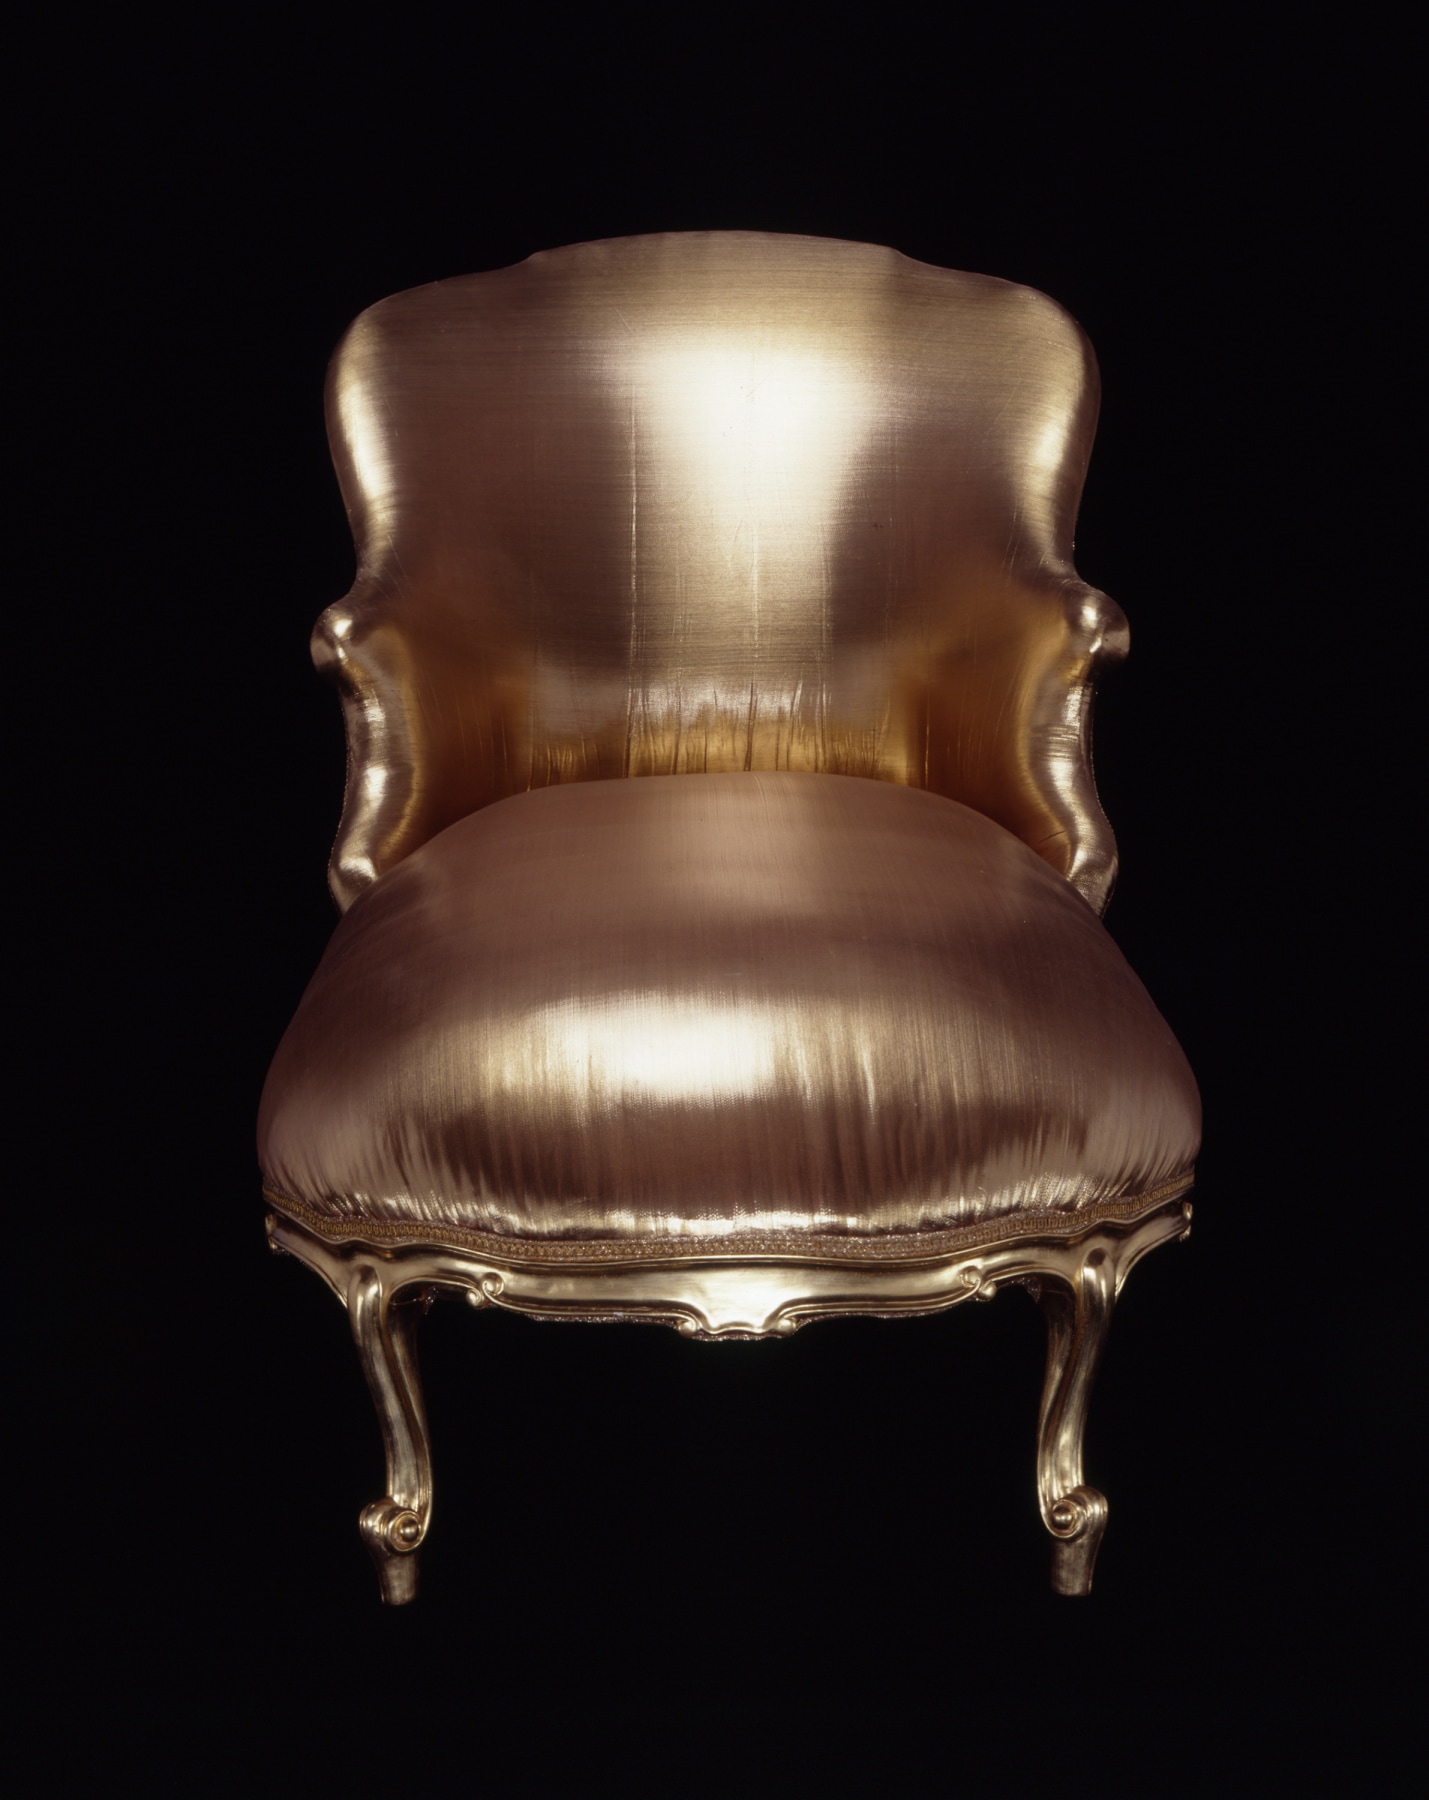 James Lee Byars

&amp;ldquo;The Golden Divan&amp;rdquo;, 1990

Antique chaise, gold silk

36 1/4 x 75 1/4 x 29 1/4 inches

92 x 191 x 74 cm

JB 124/C